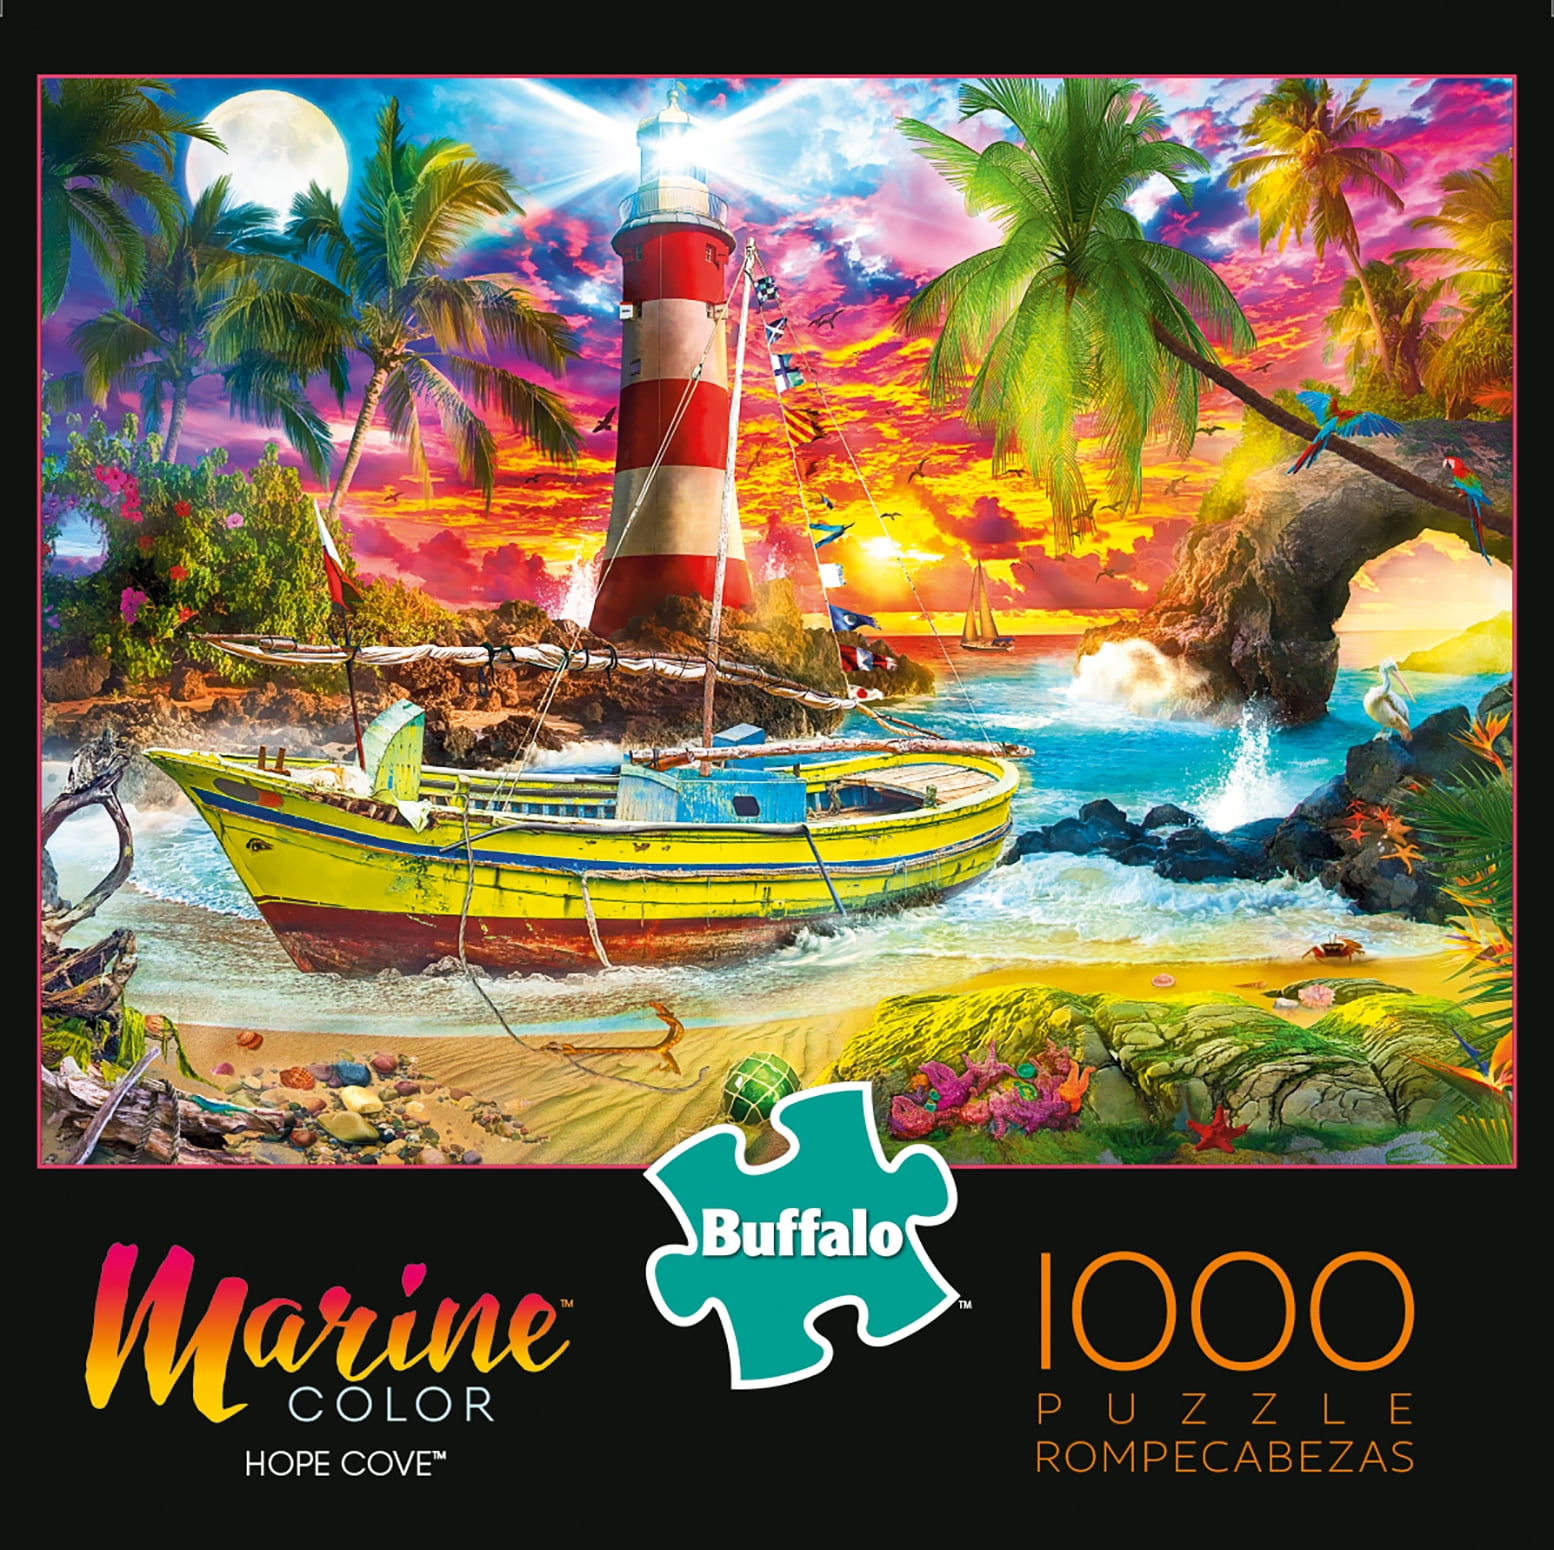 Buffalo Marine Color Hope Cove 1000 Piece Jigsaw Puzzle 